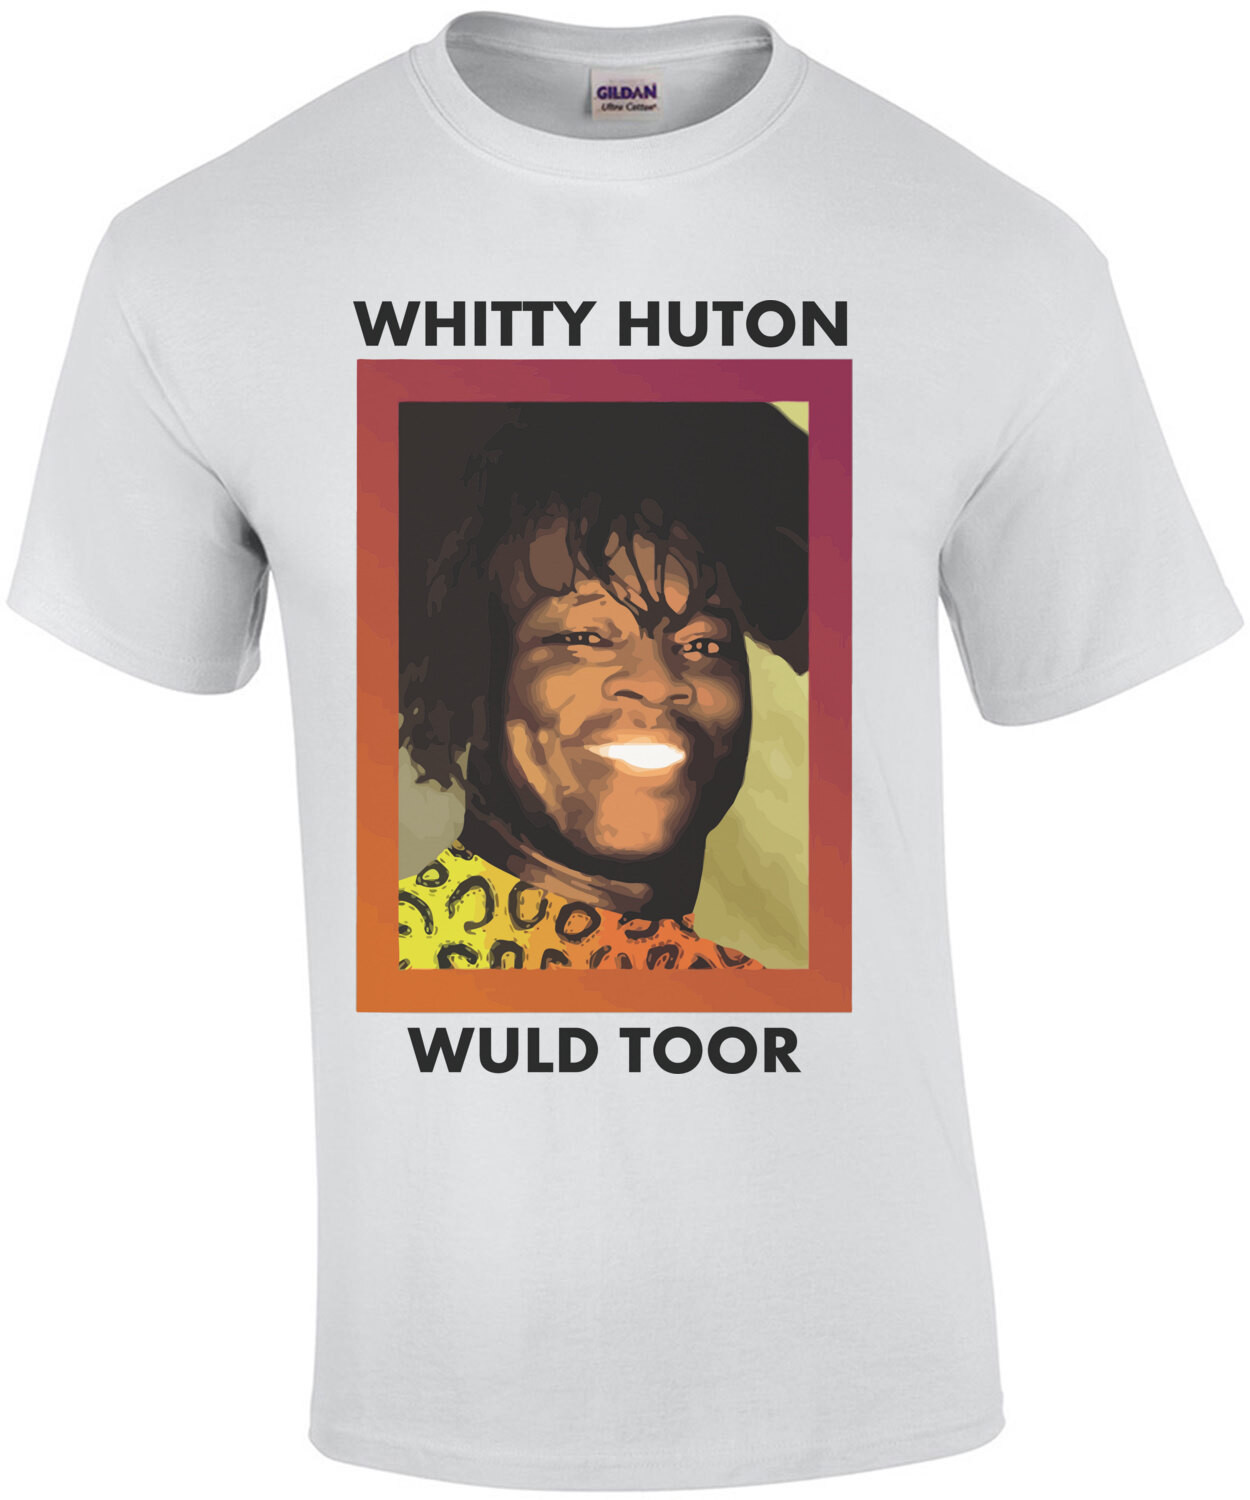 Whitty Huton Wuld Toor - Martin TV Show - 90's T-Shirt